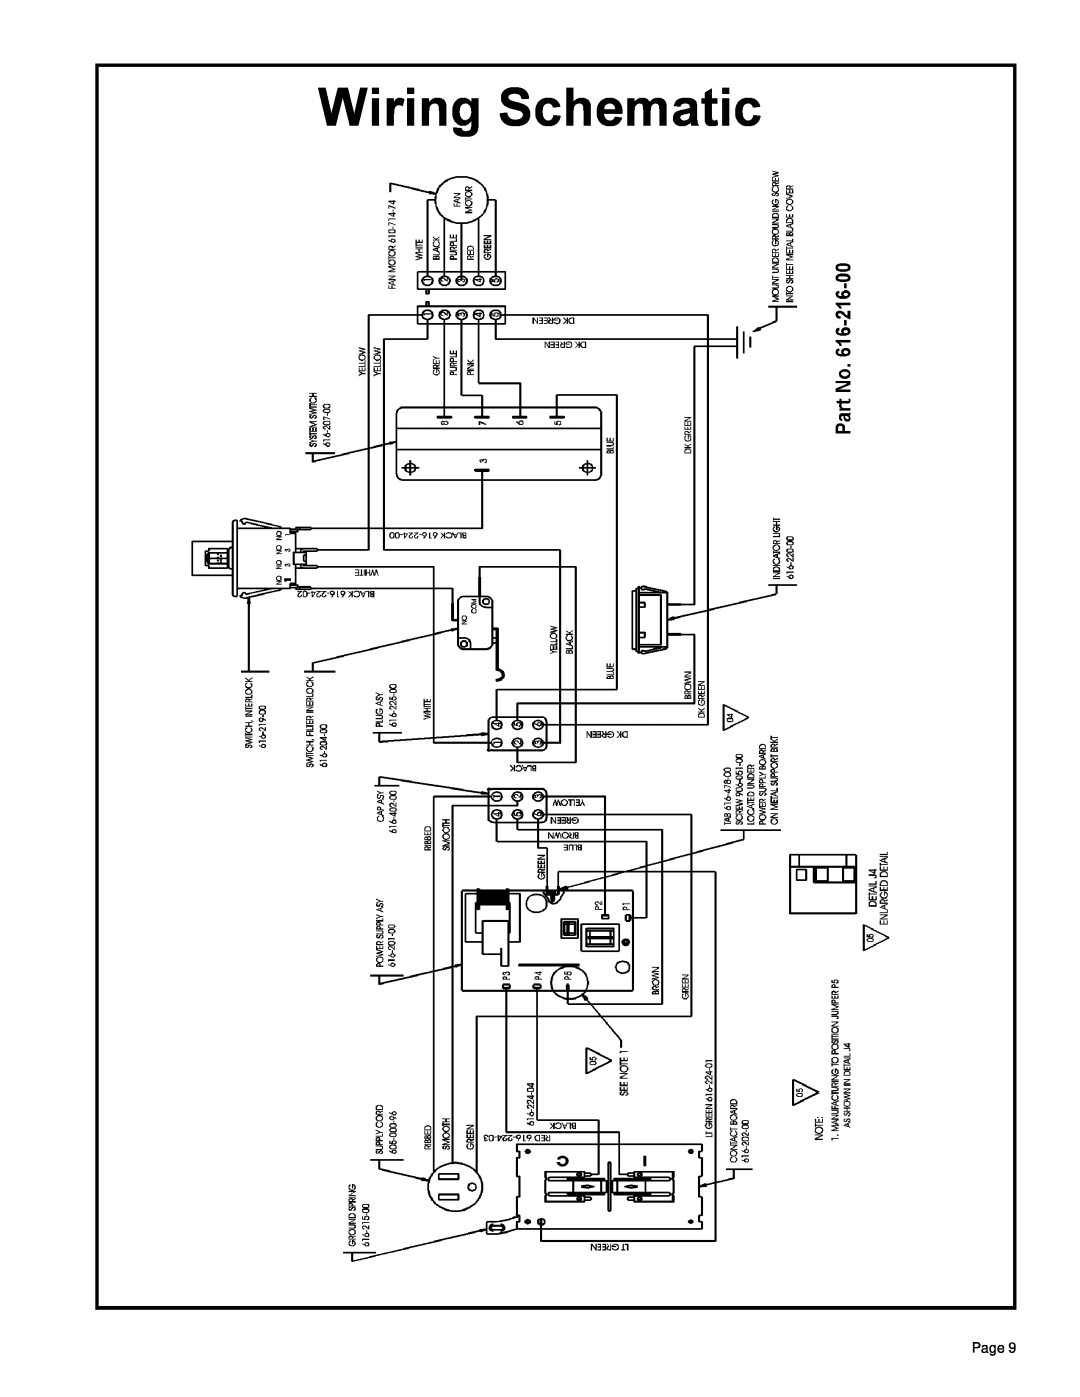 Friedrich C-90A manual Wiring Schematic, Page 